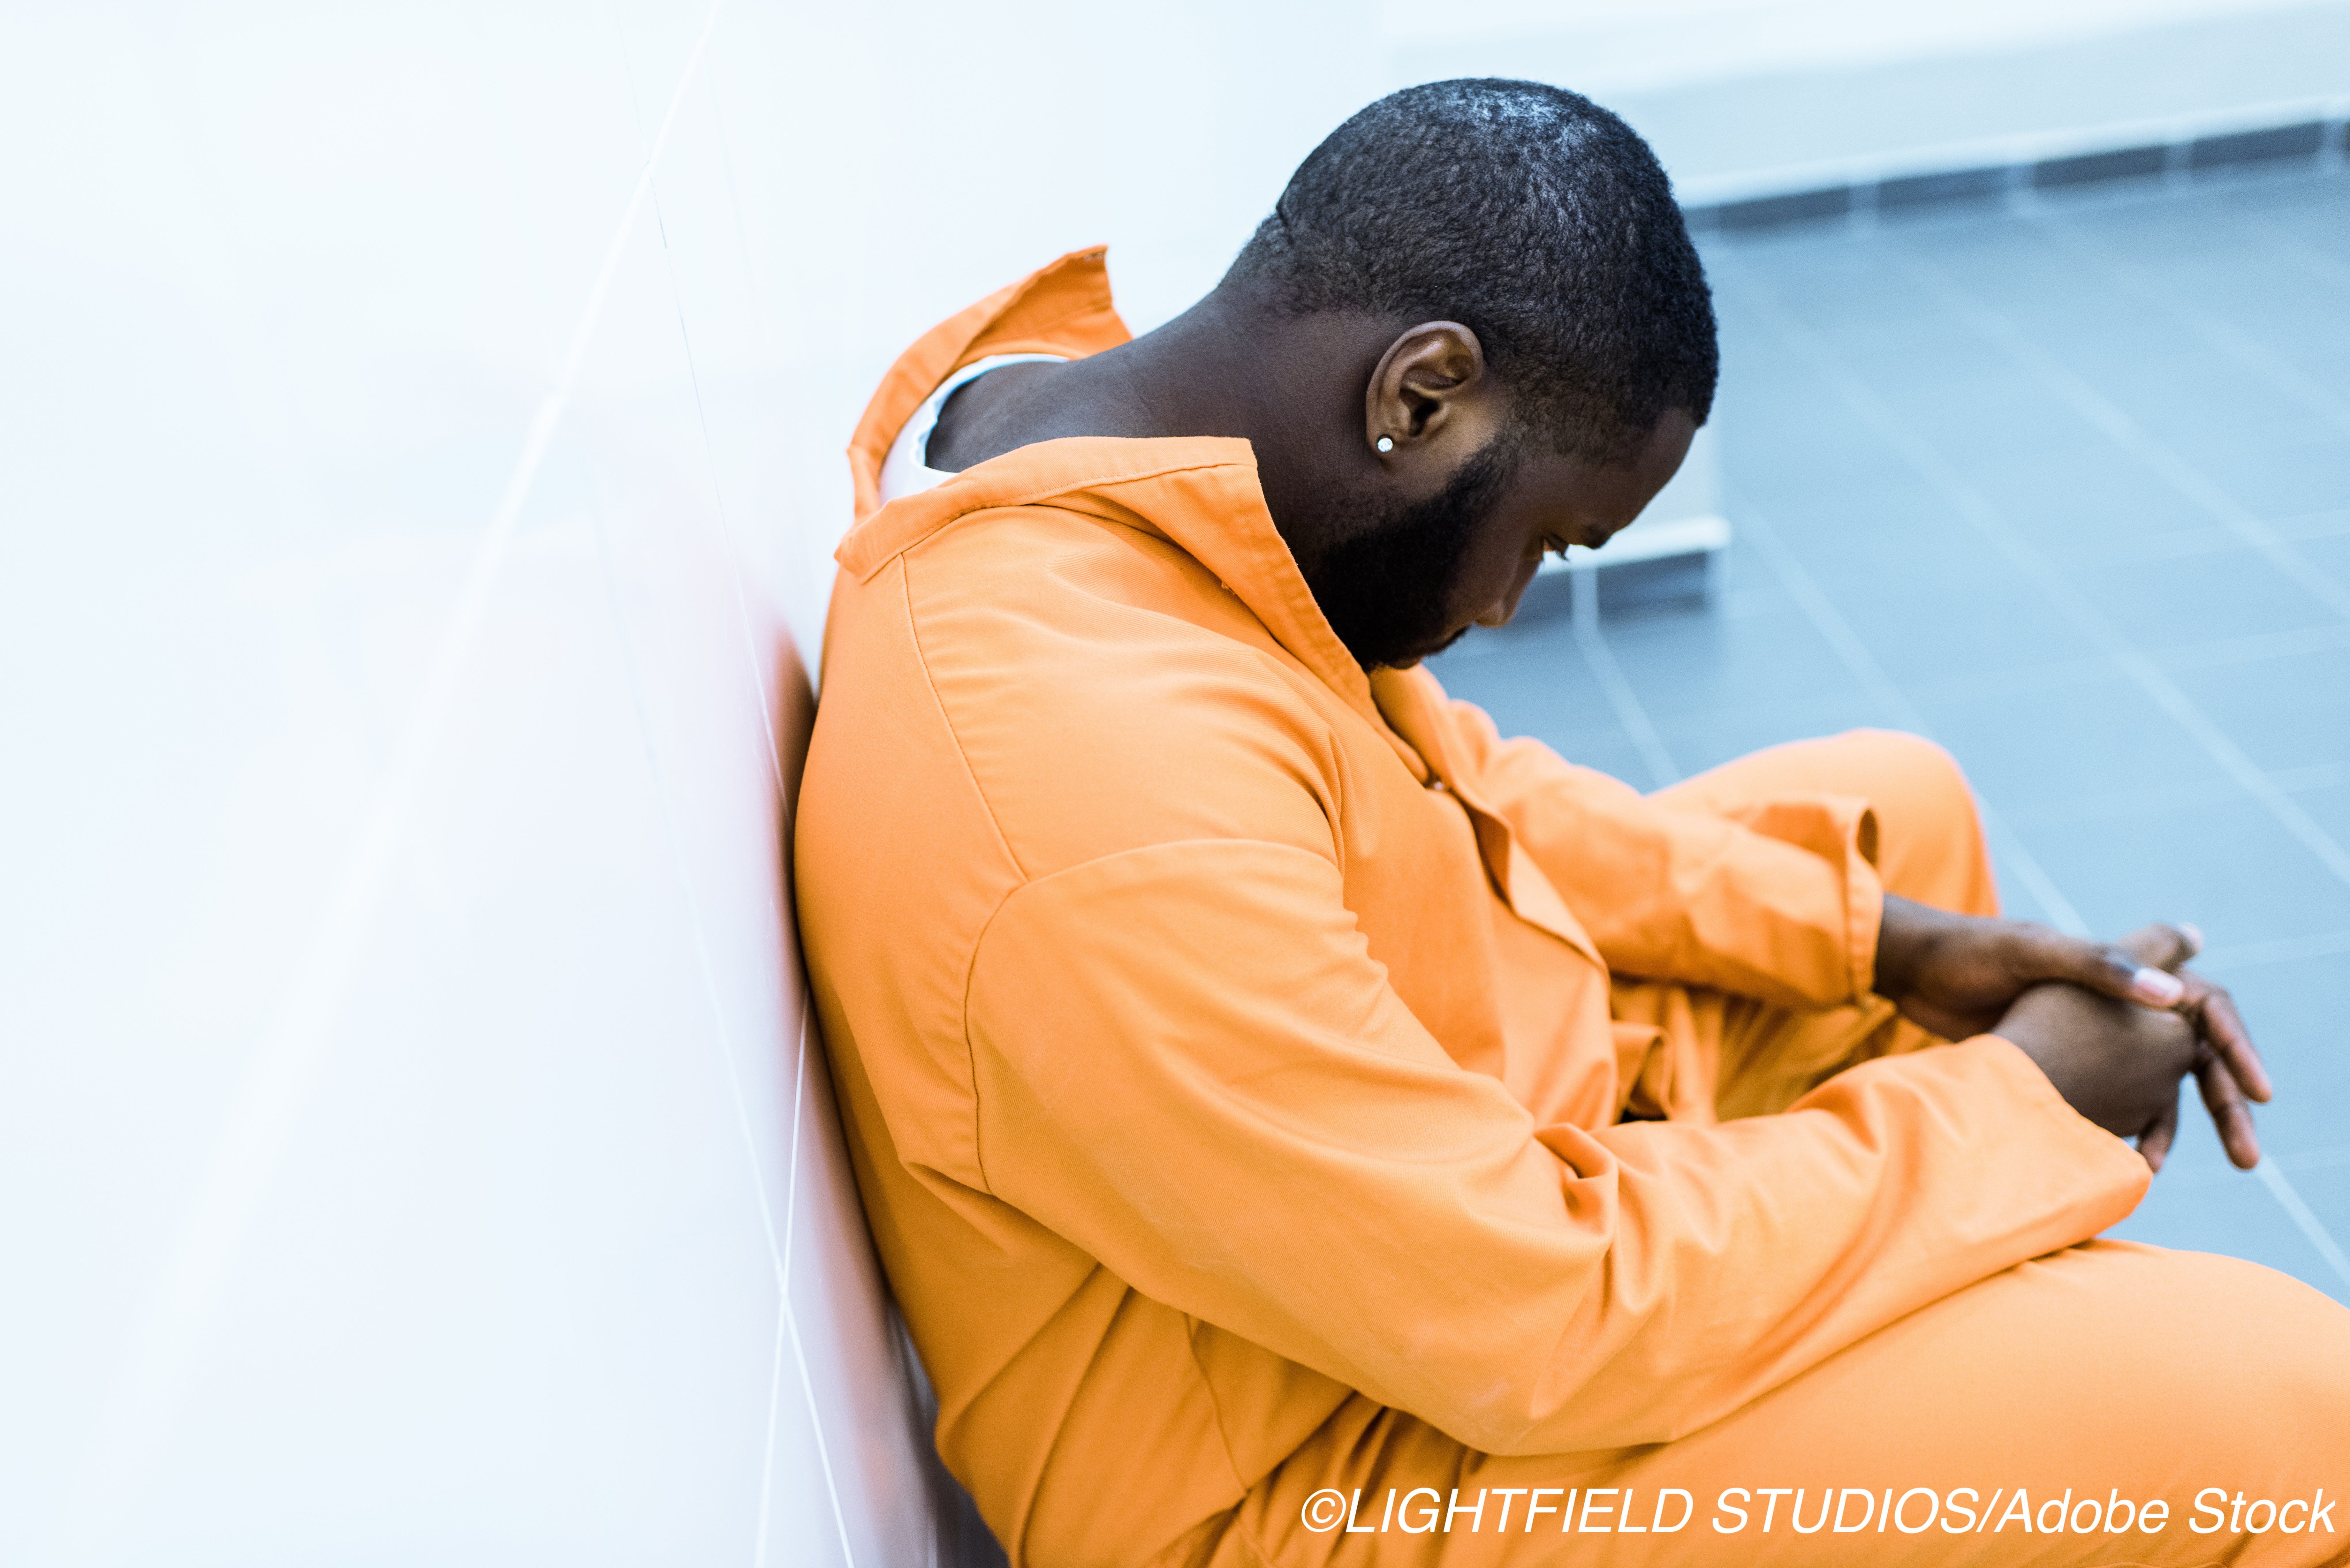 Self-Harm in Prison Tied to Several Modifiable Risk Factors